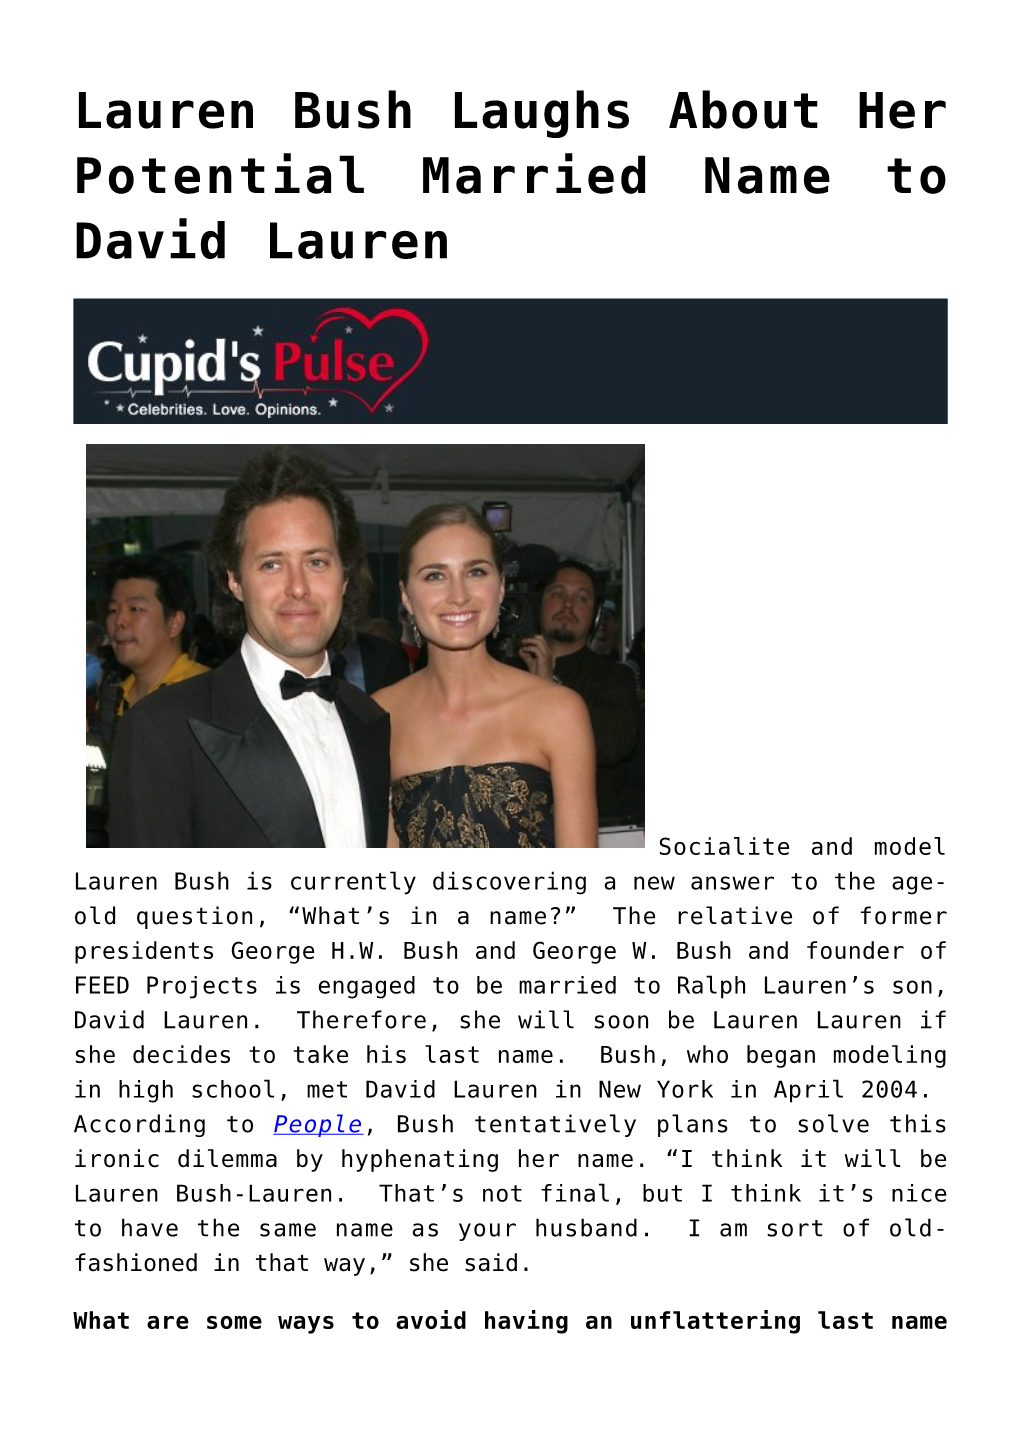 Lauren Bush Laughs About Her Potential Married Name to David Lauren